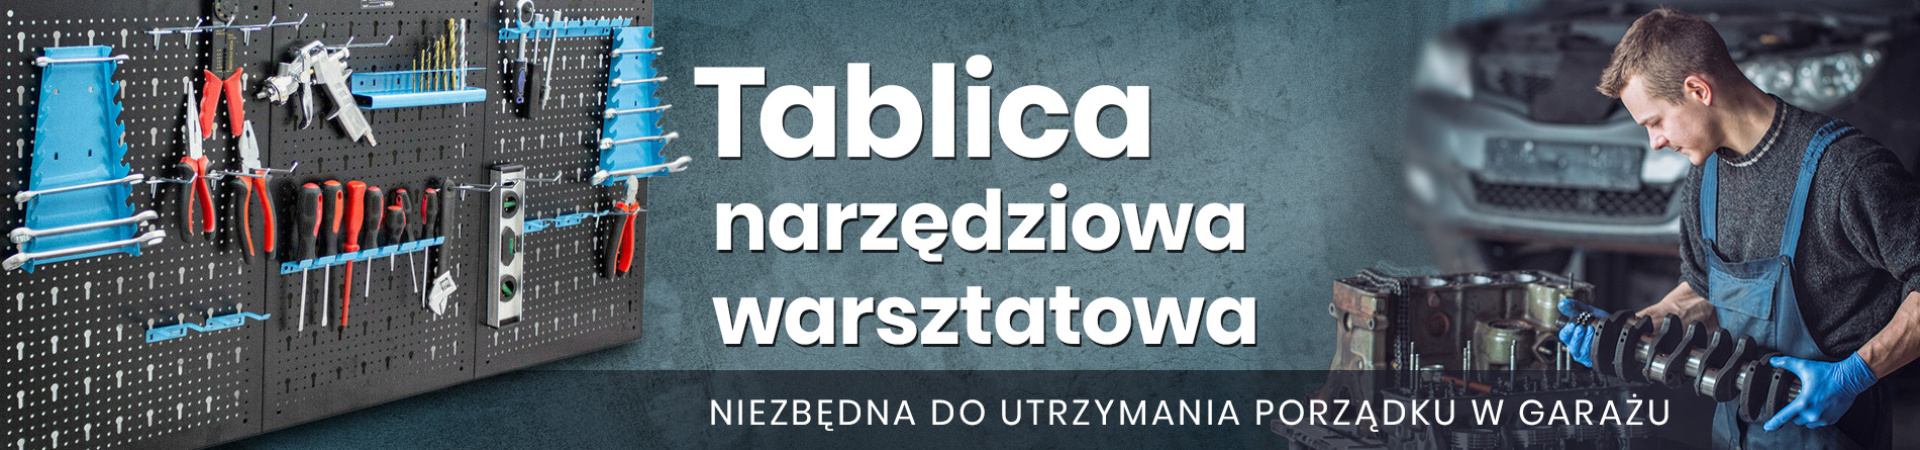 Banner_tablica_narzedziowa